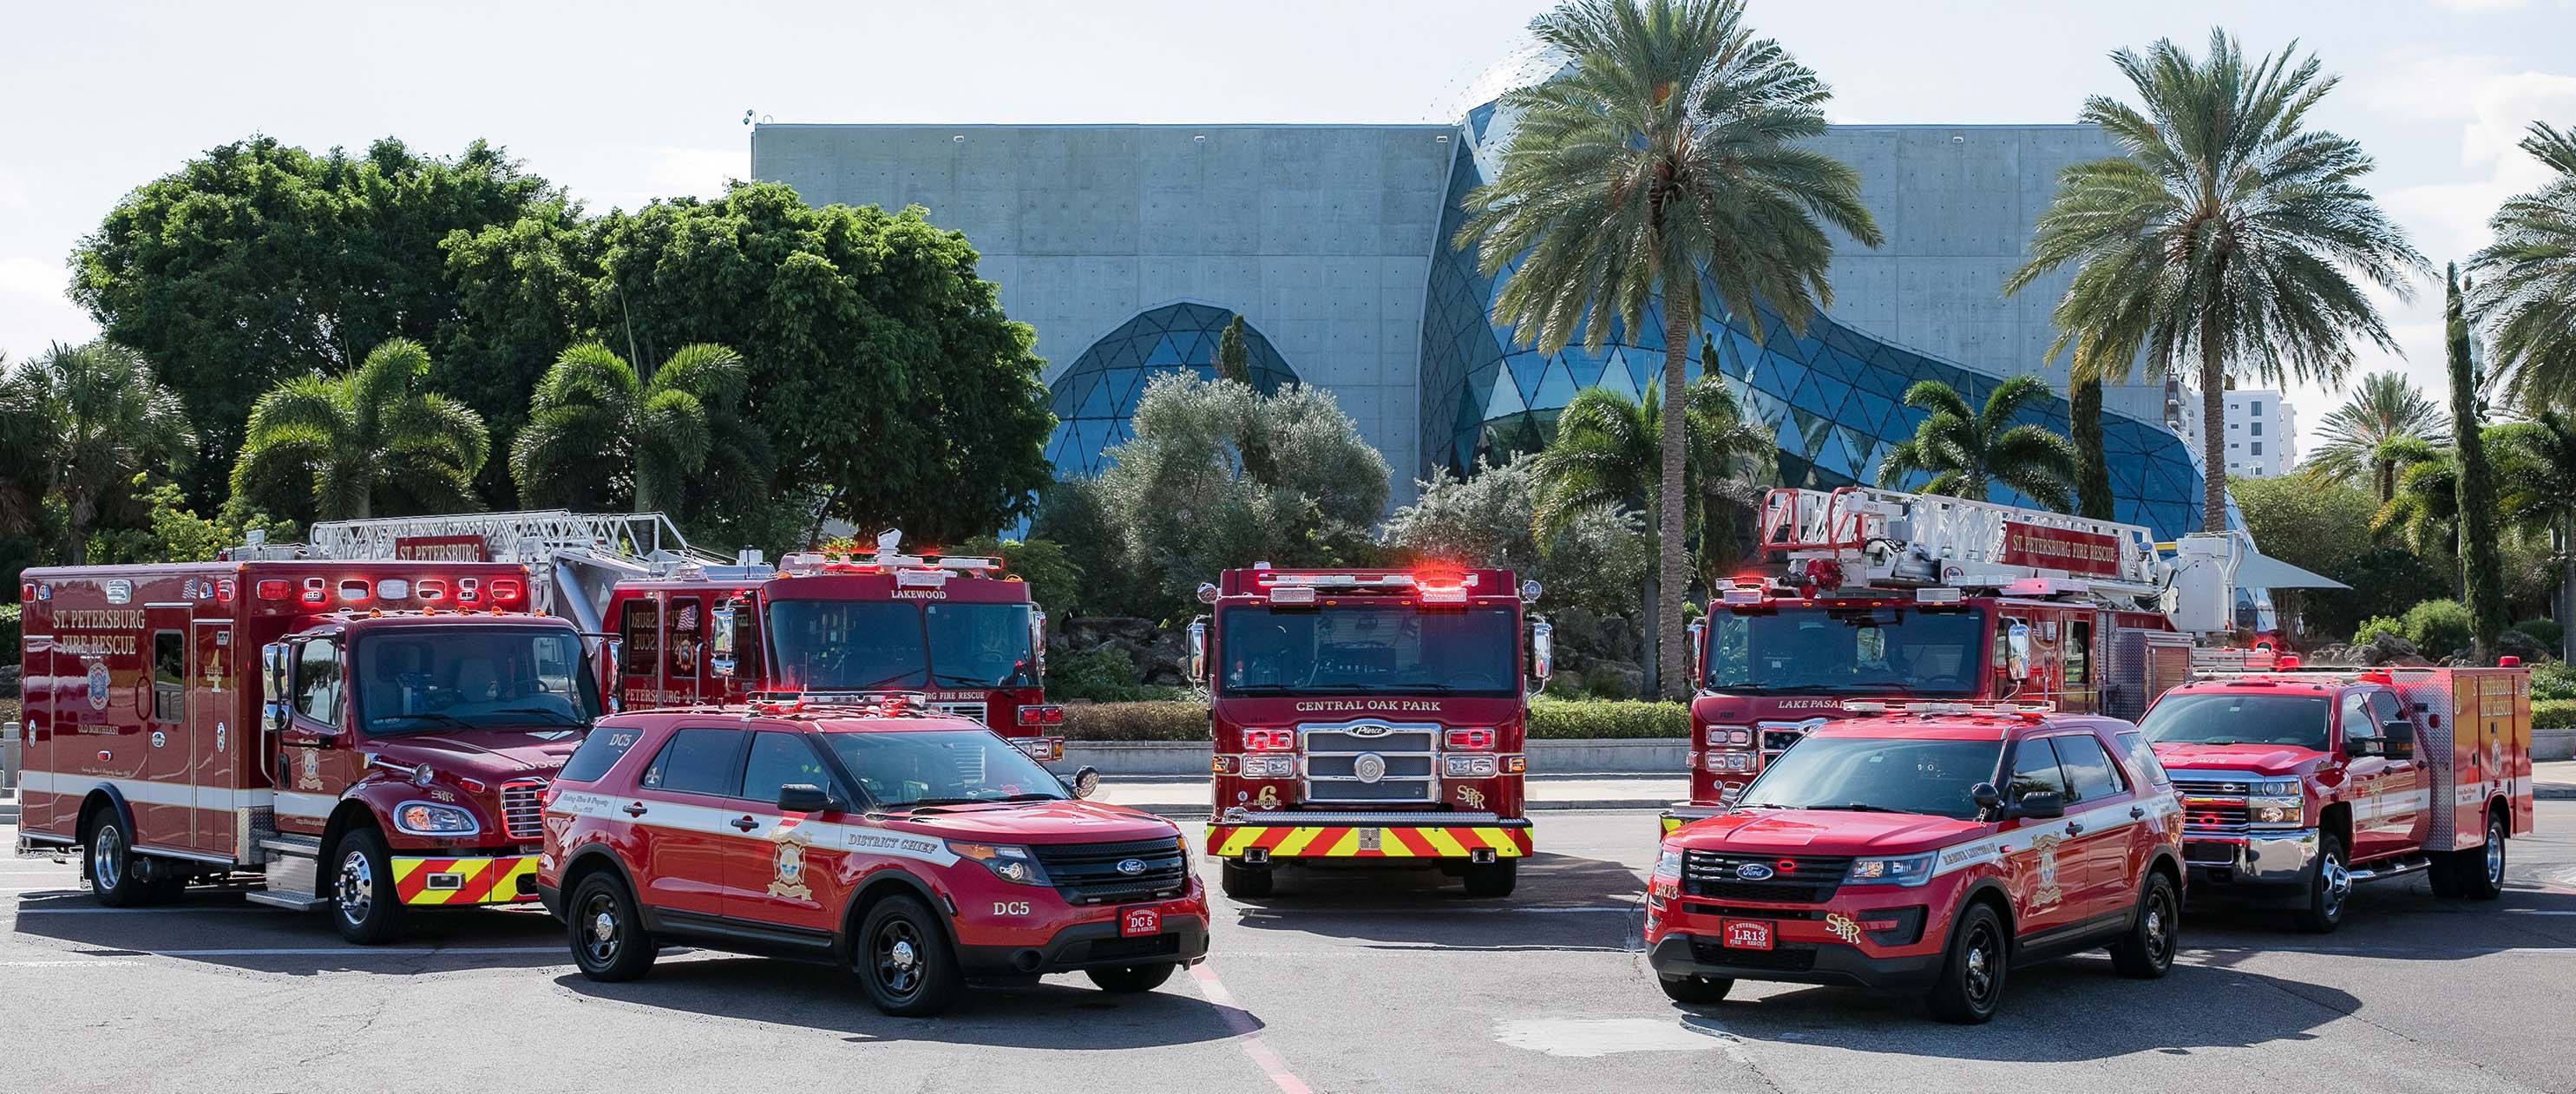 Fire apparatus fleet in front of Dali museum